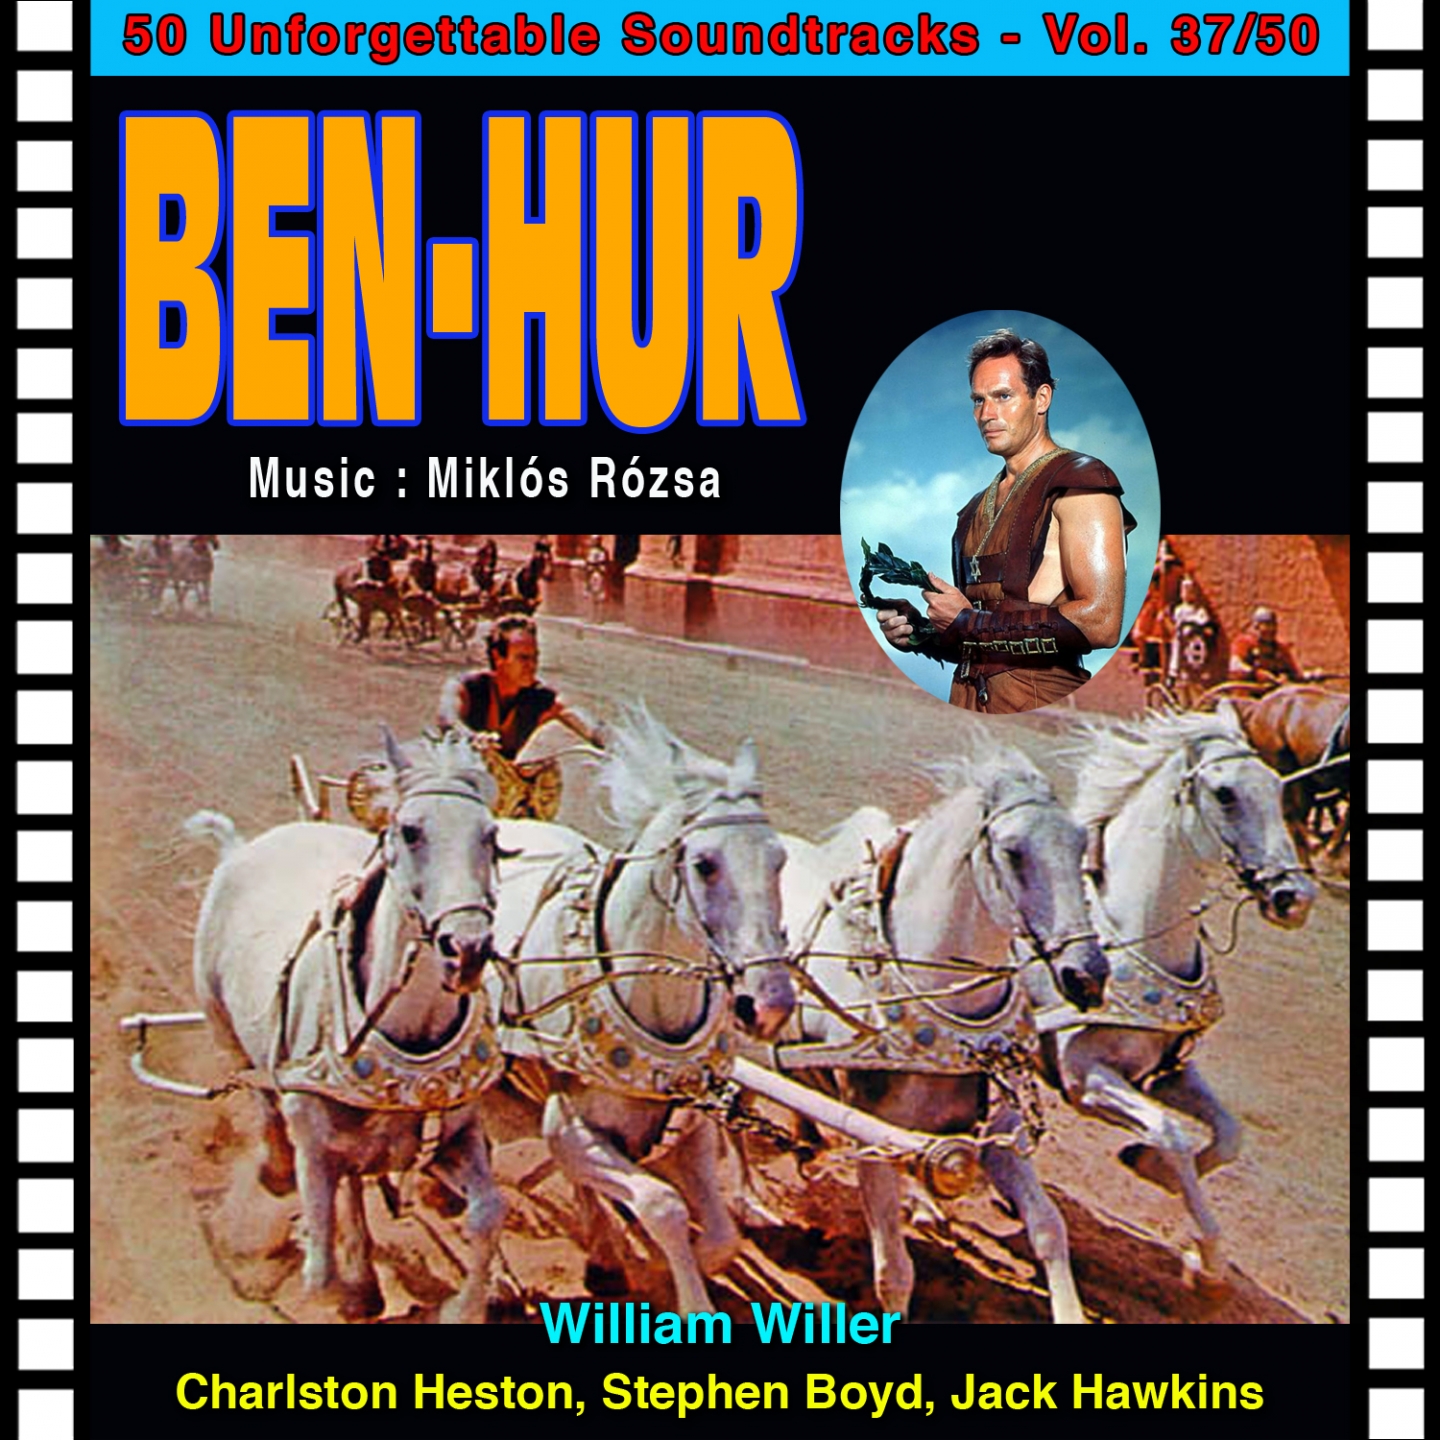 Fanfare & Prelude, Bethlehem, Adoration of the Magi (Ben-Hur)